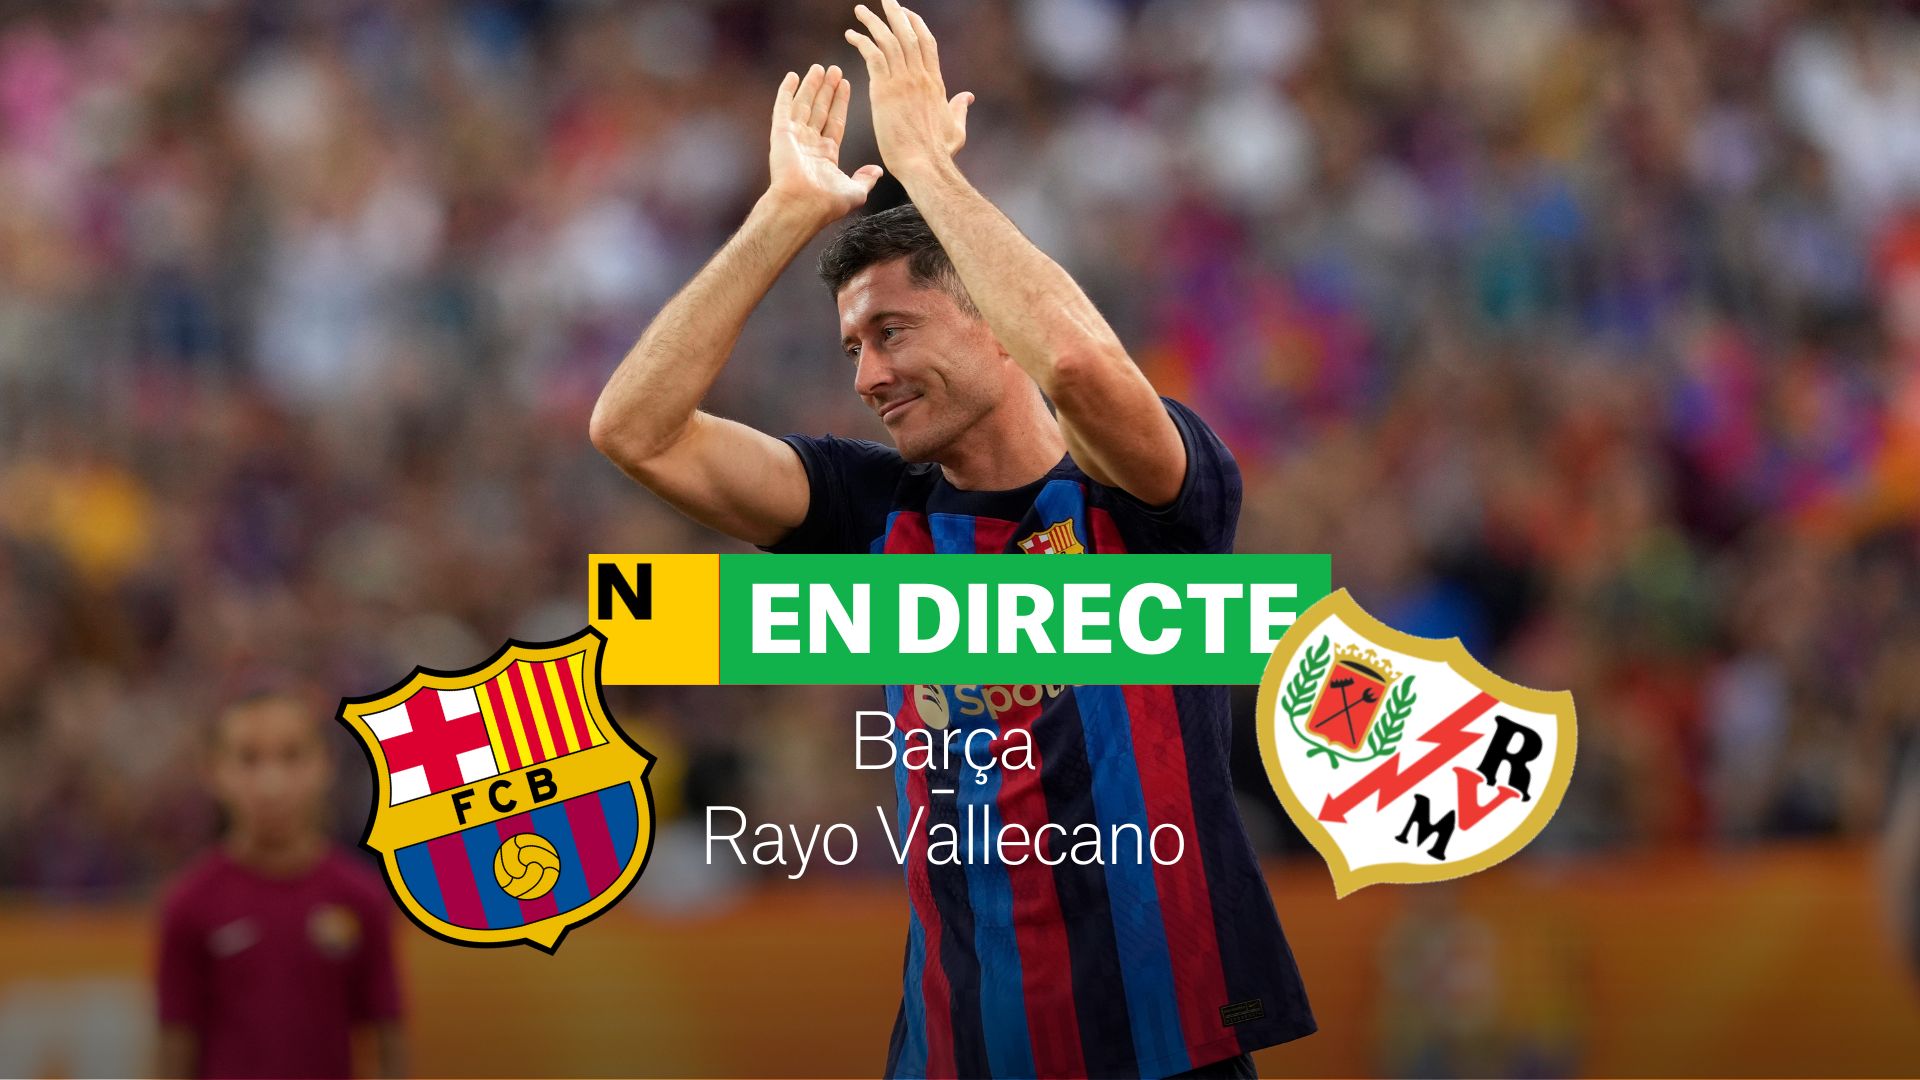 Barça-Rayo Vallecano de la Lliga Santander: resultat, resum i gols